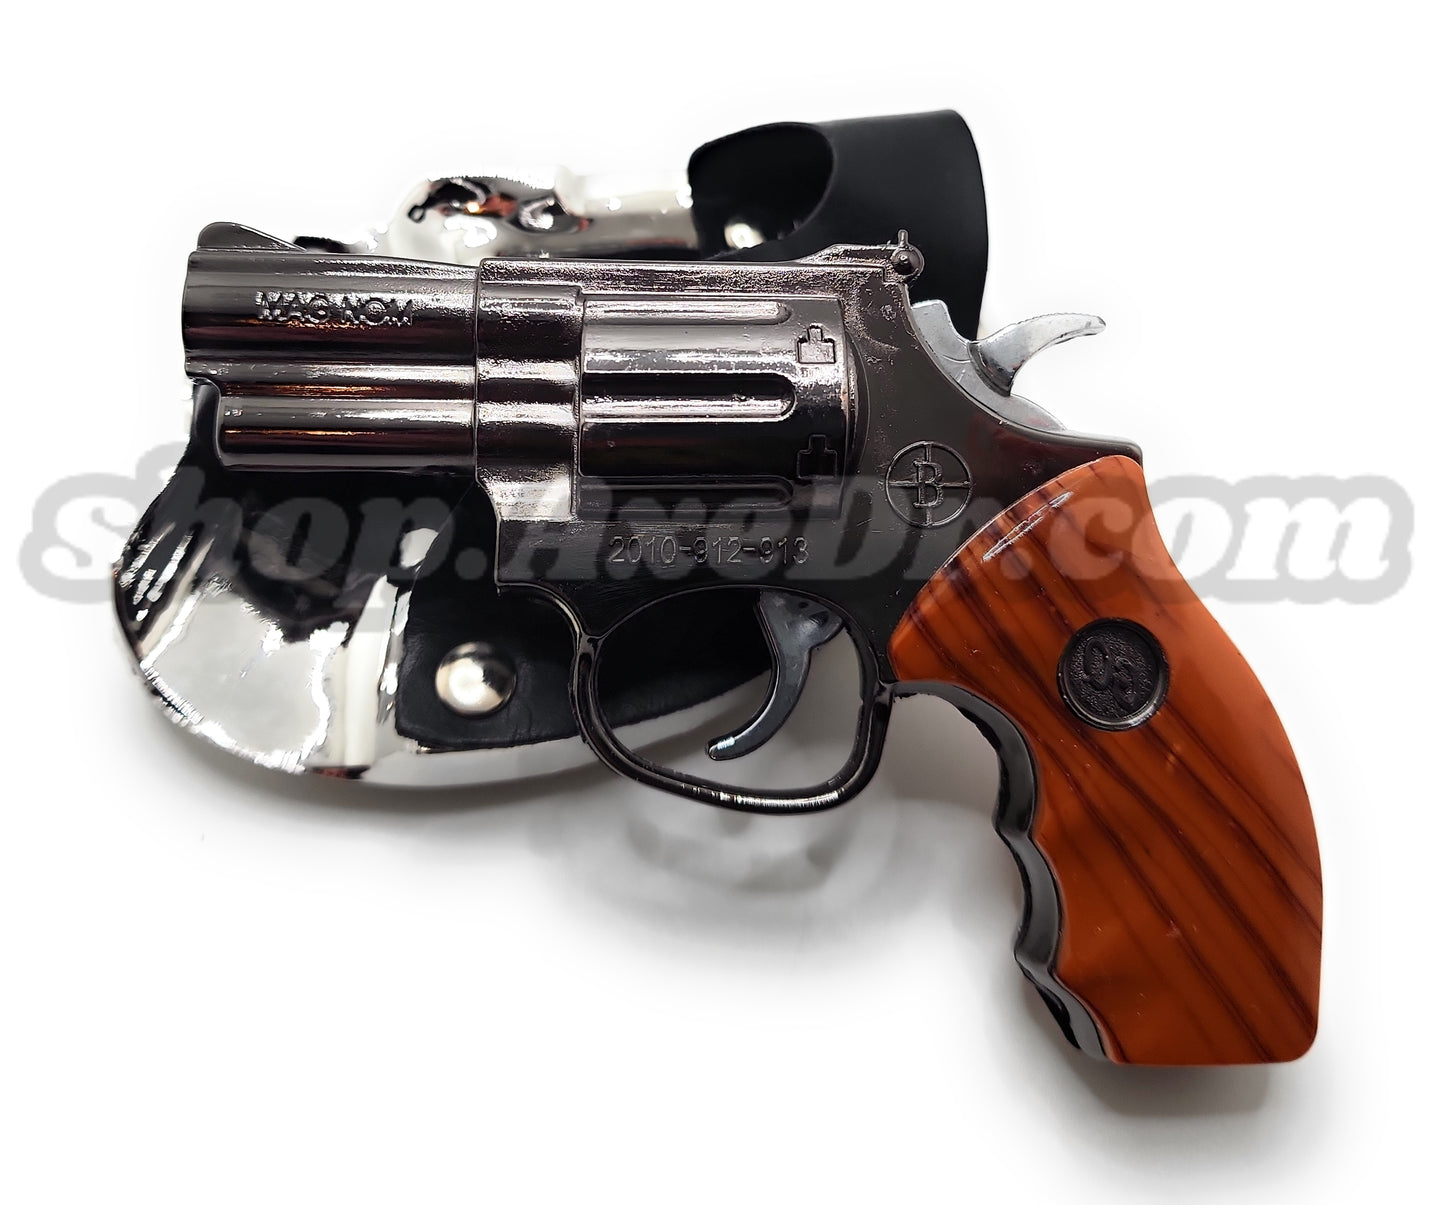 Snub Nose Revolver Pistol Jet Lighter and Flashlight Belt Buckle